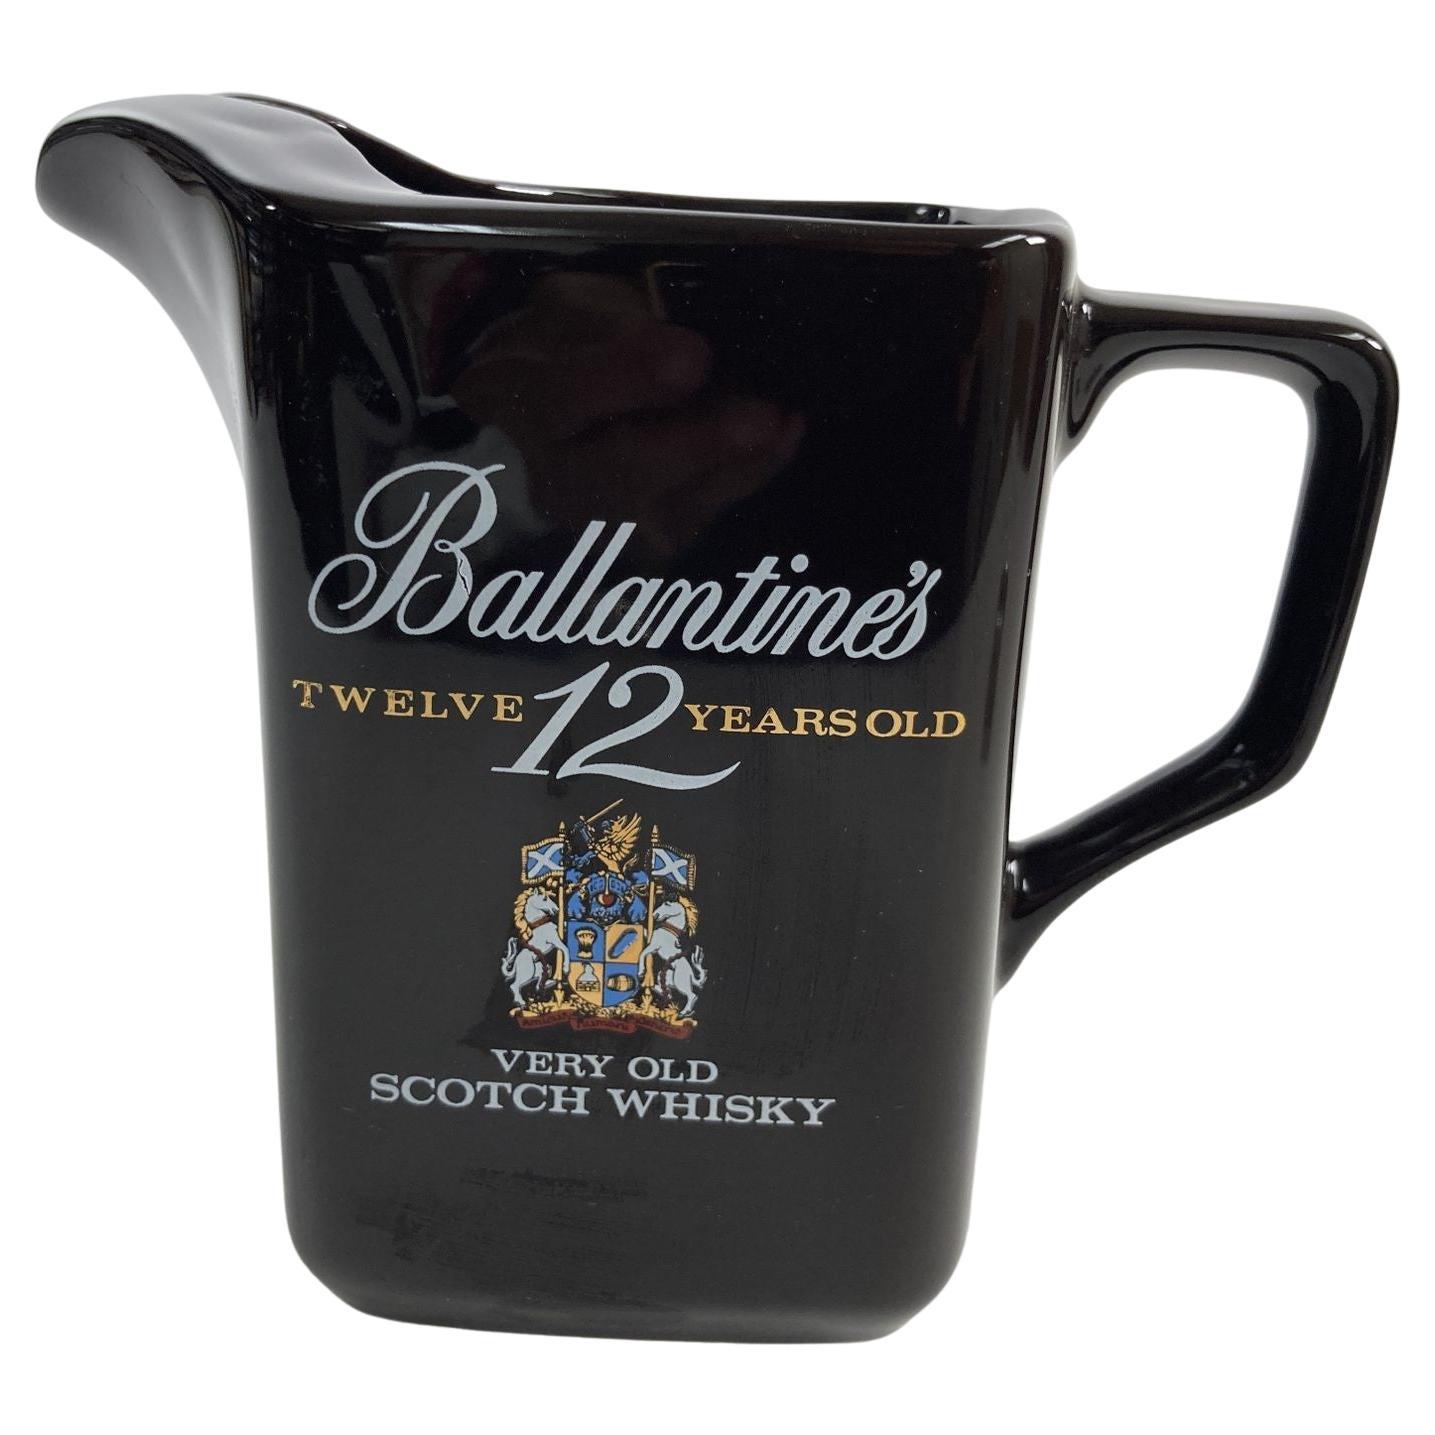 Vintage Black Barware Water Pitcher for Ballantine's 1980's For Sale